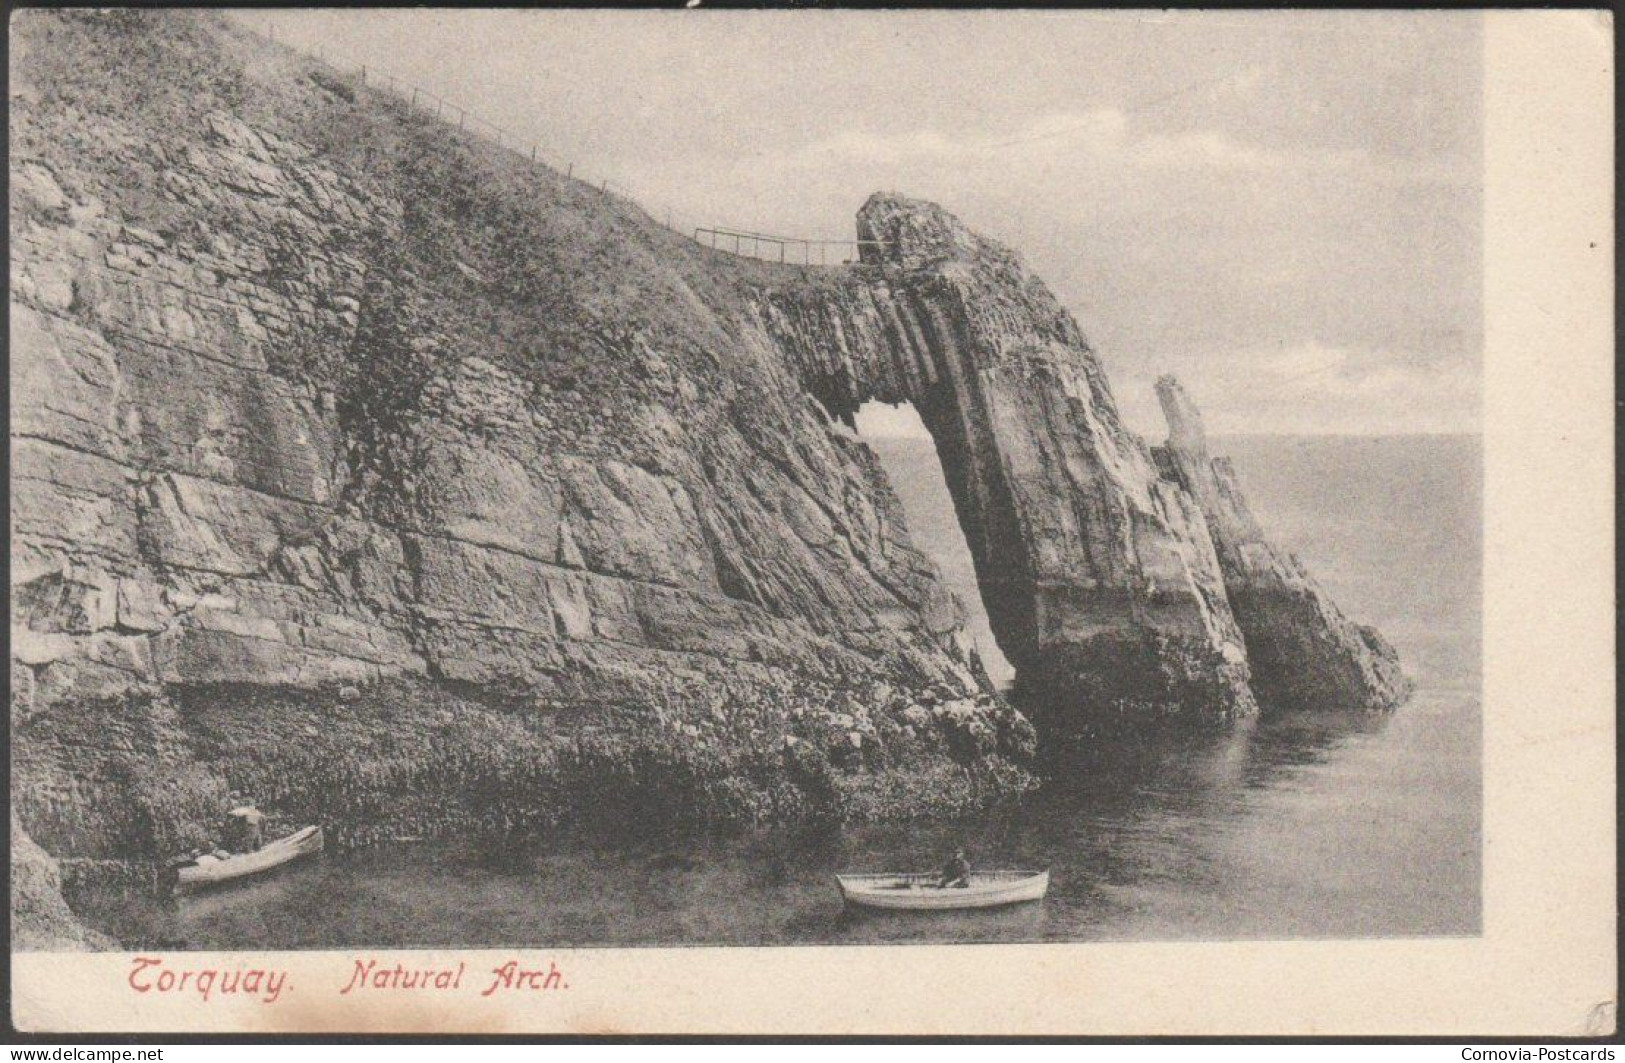 Natural Arch, Torquay, Devon, 1904 - Frith's Postcard - Torquay